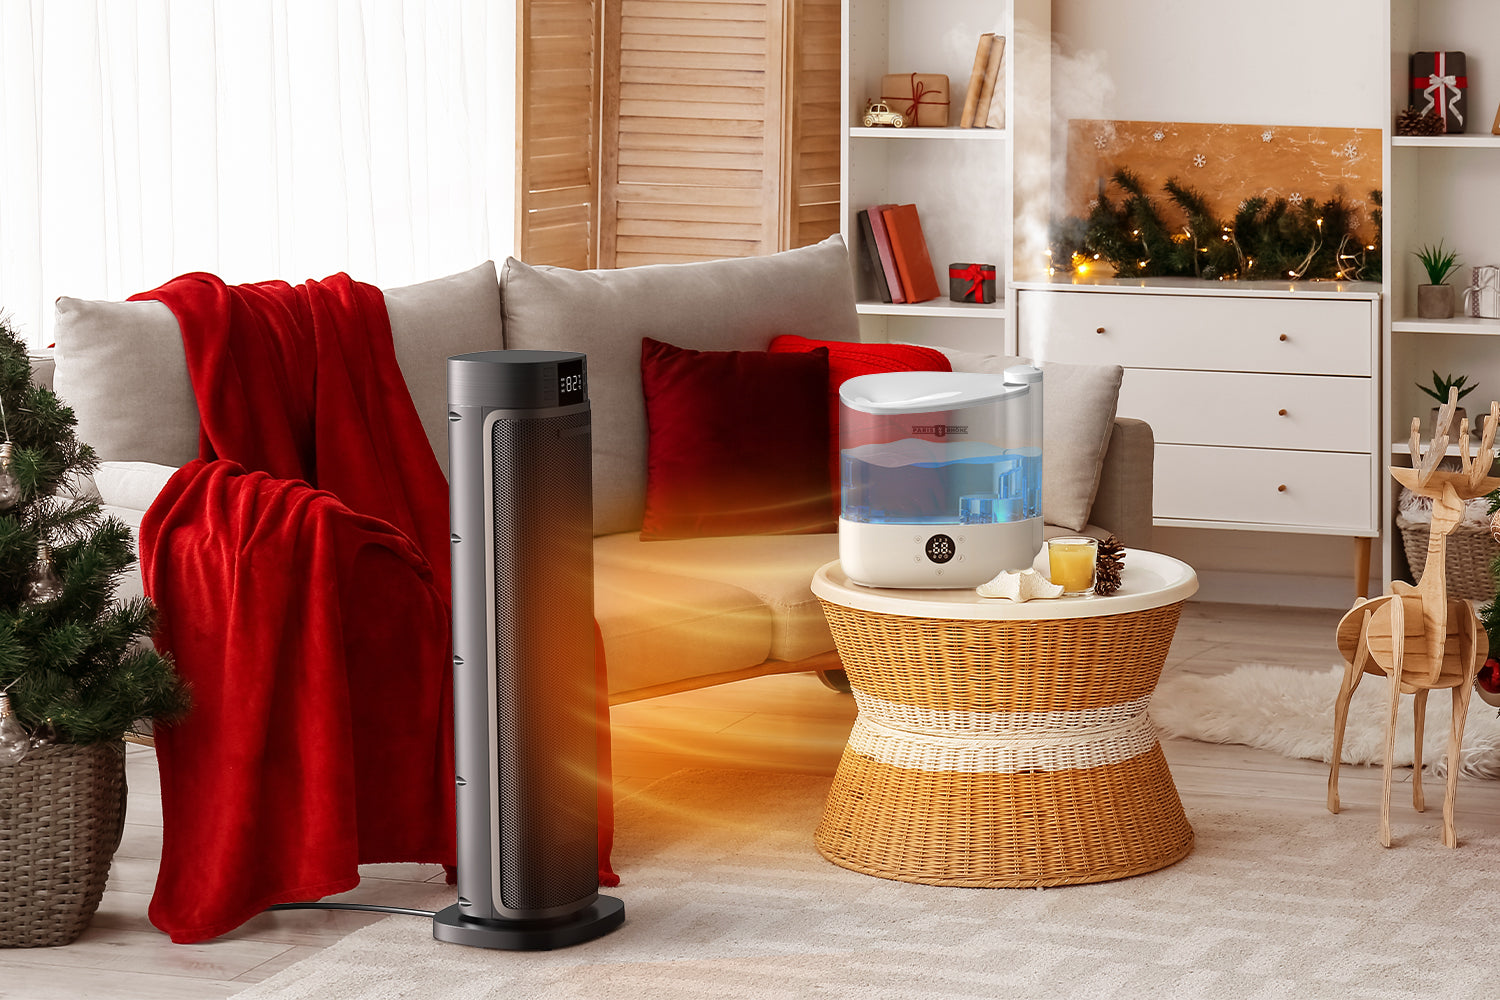 Humidifier in Winter: Breathe Easy & Stay Cozy!